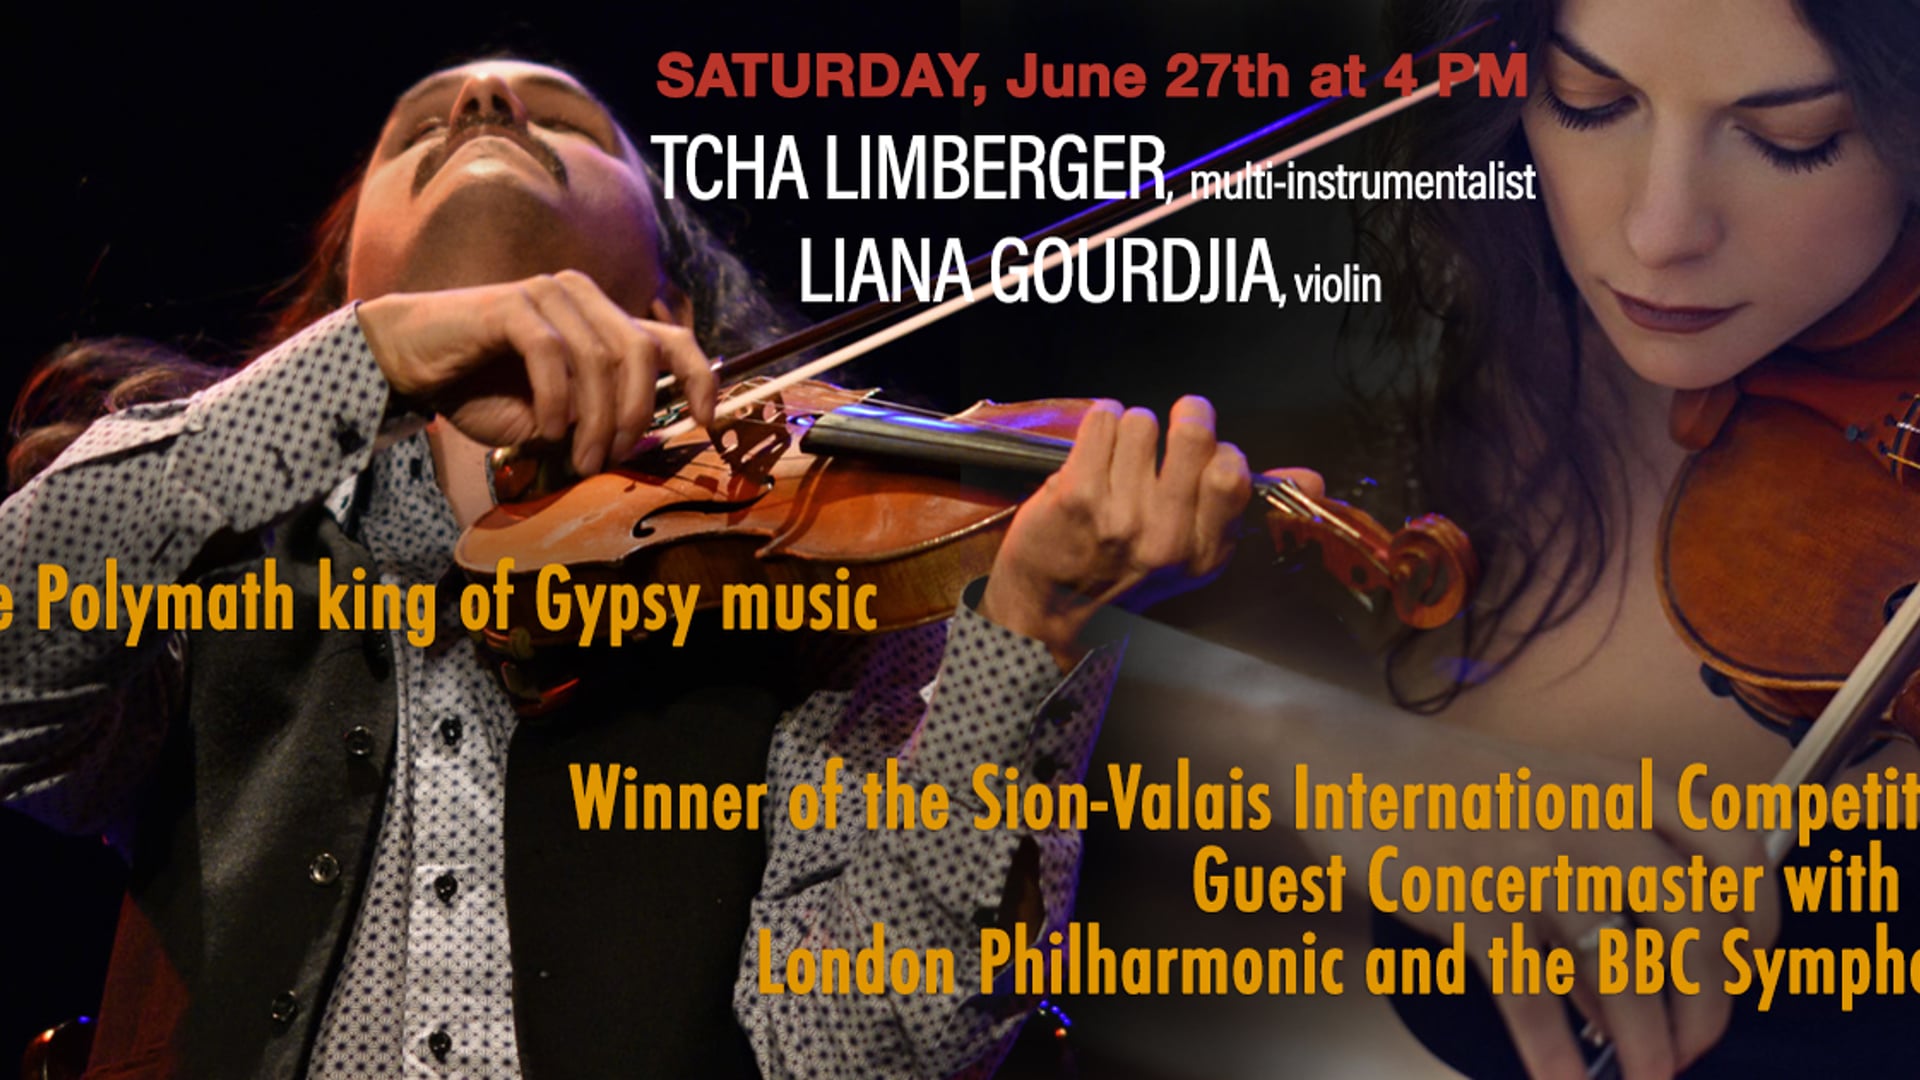 Live with Mainly Mozart, Episode 7-  Tcha Limberger, Multi-instrumentalist, Liana Gourdjia, Violin